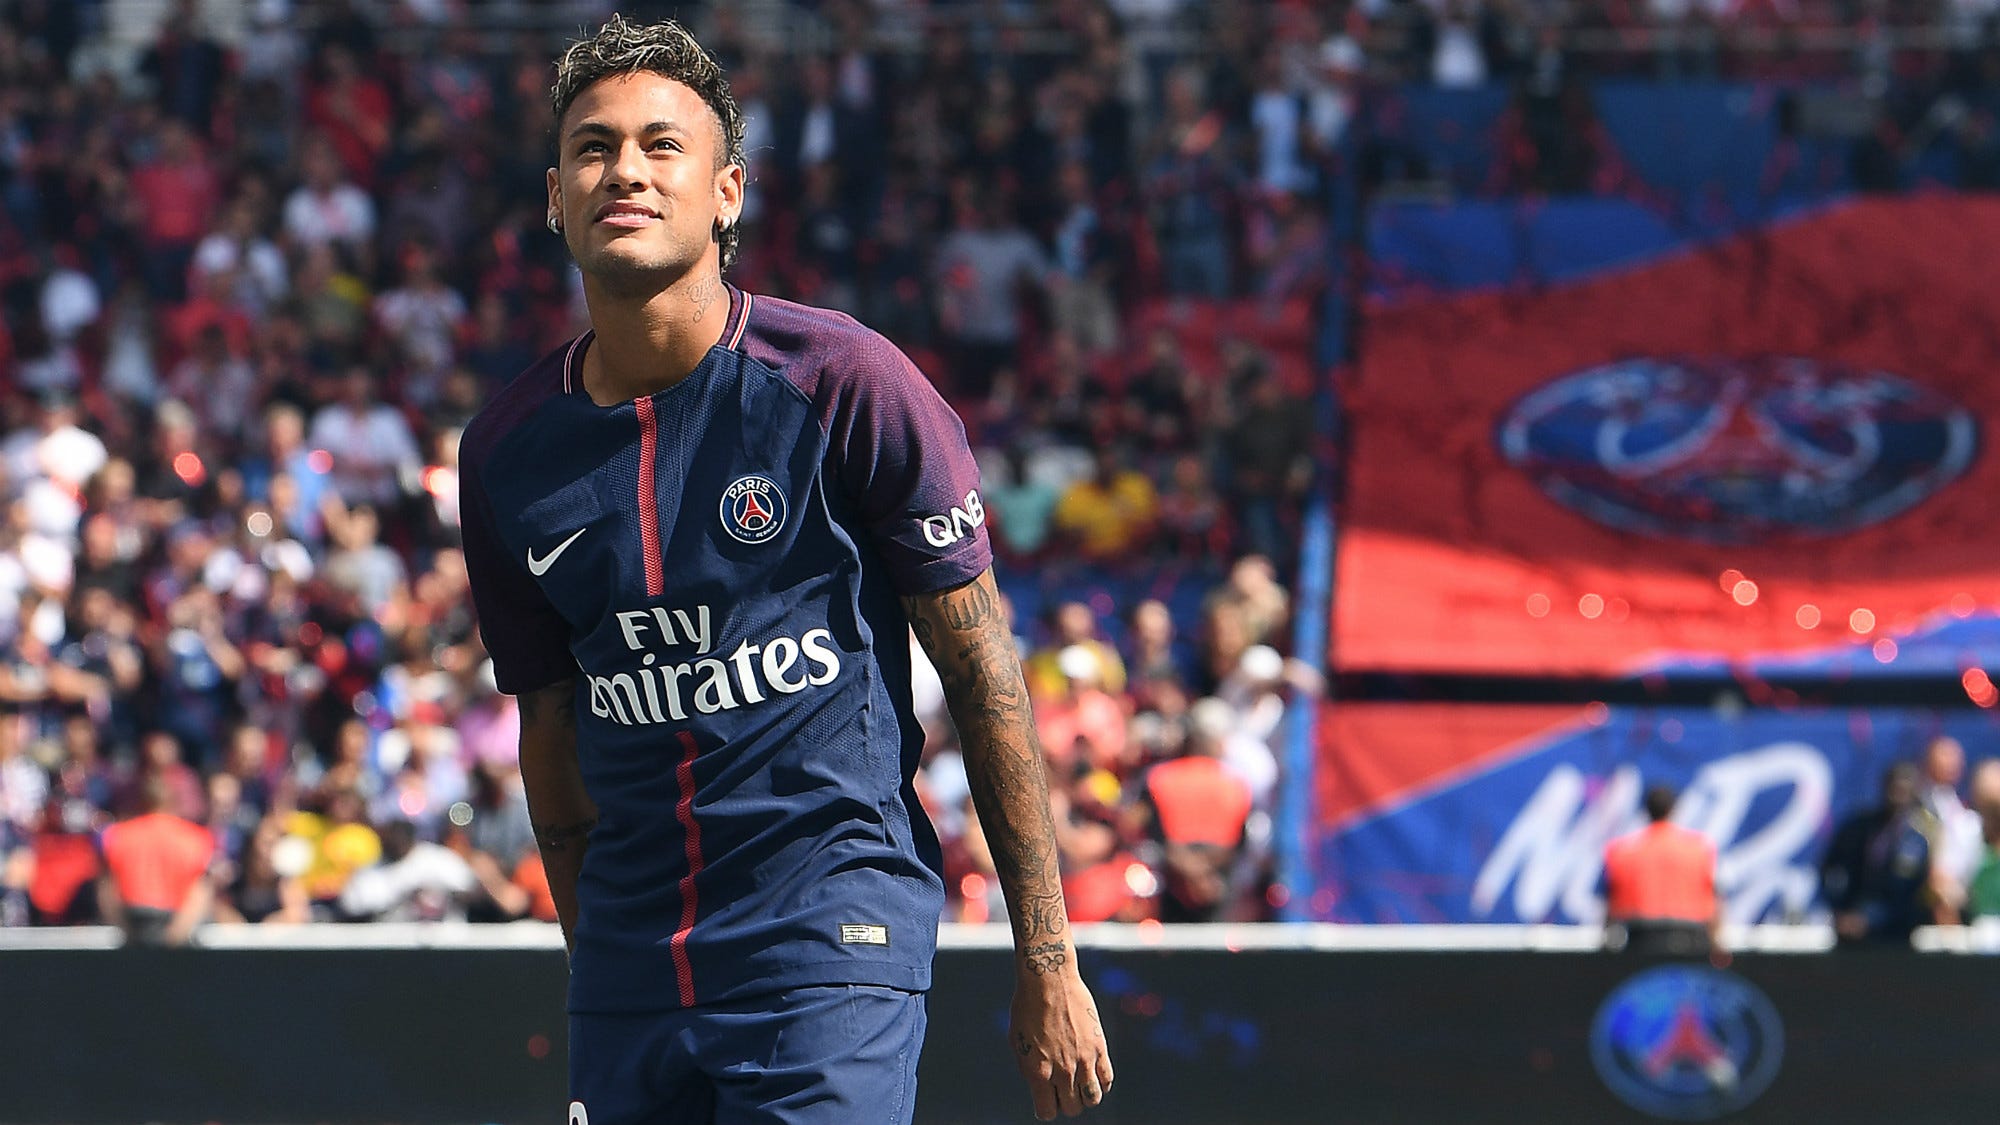 Neymar debut: When will the Brazil star play for PSG? 